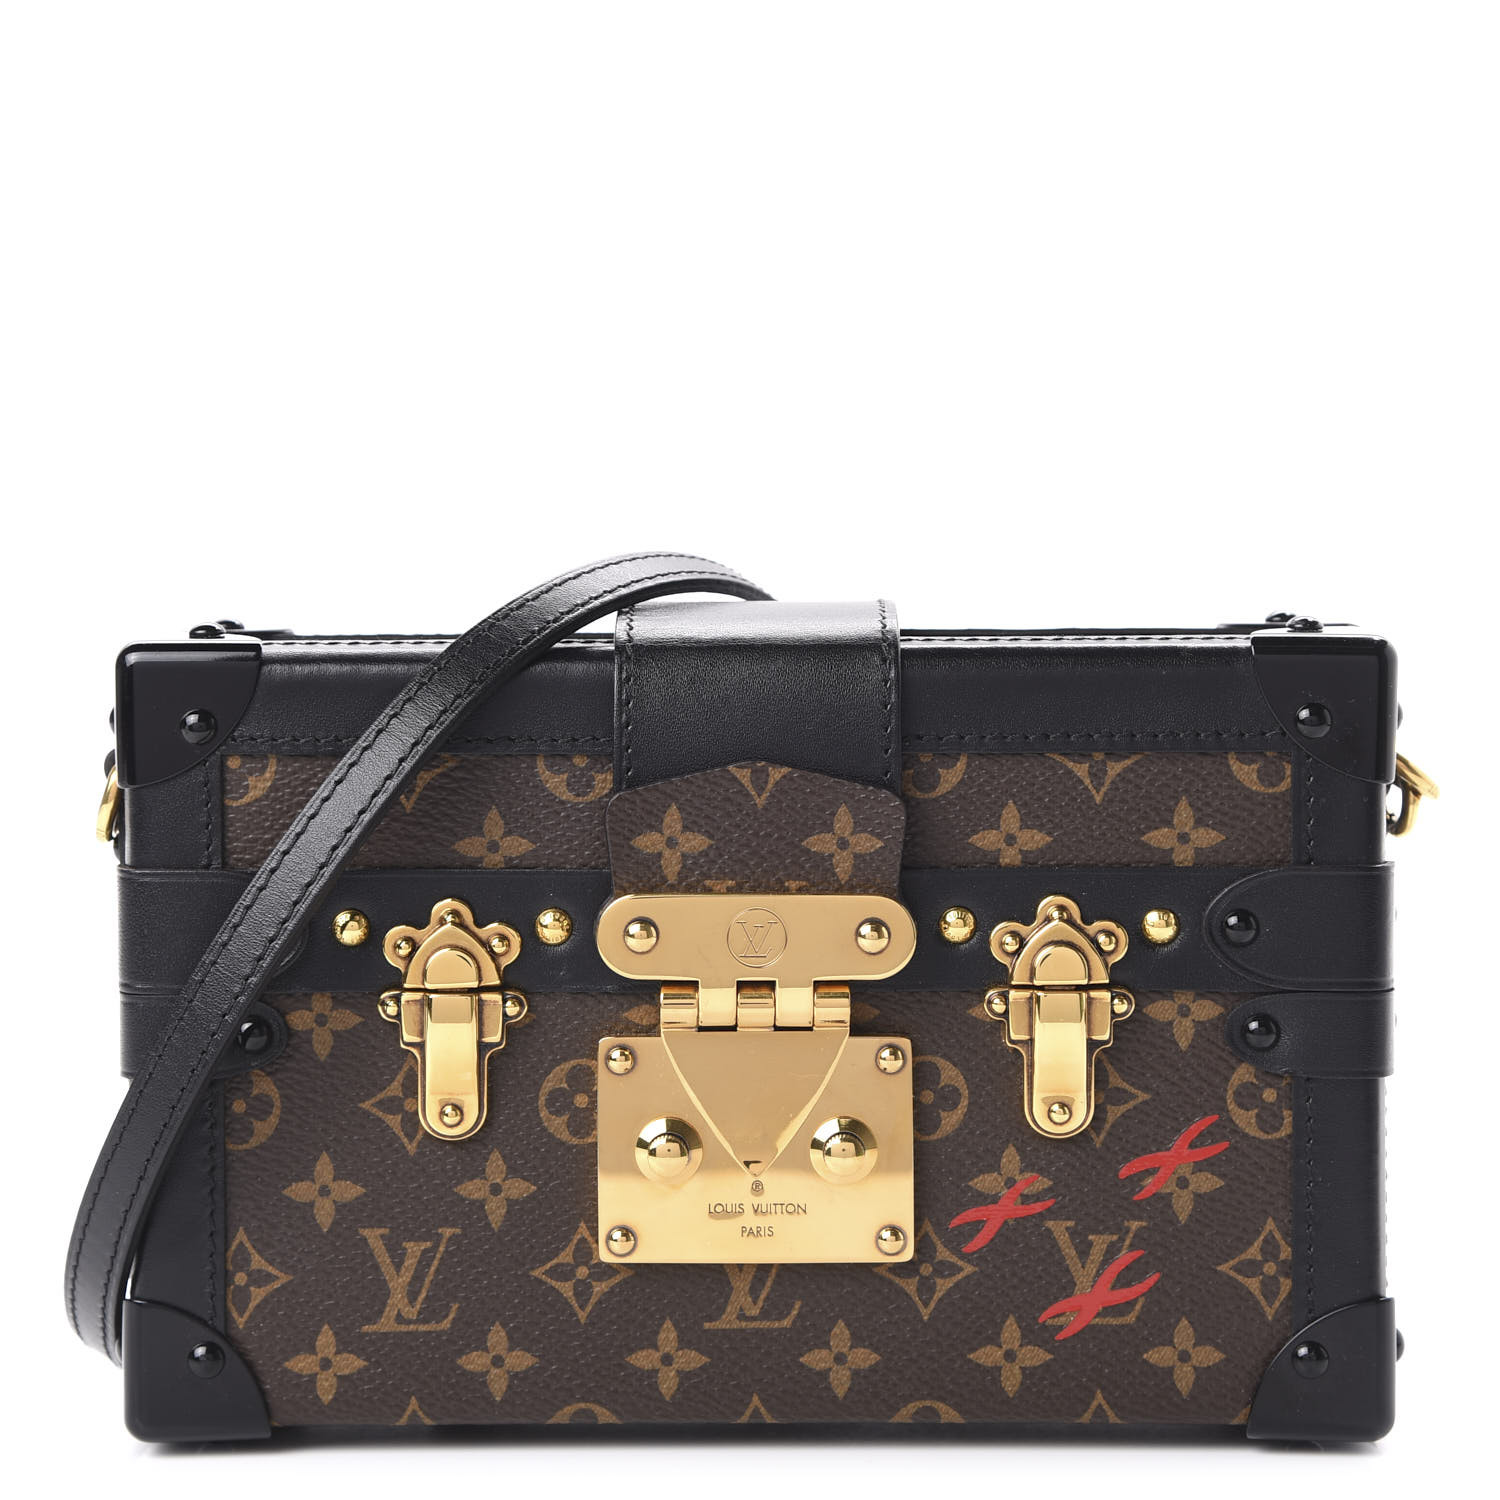 Louis Vuitton Petite Malle Bag in Damier Ebene with Golden Brass